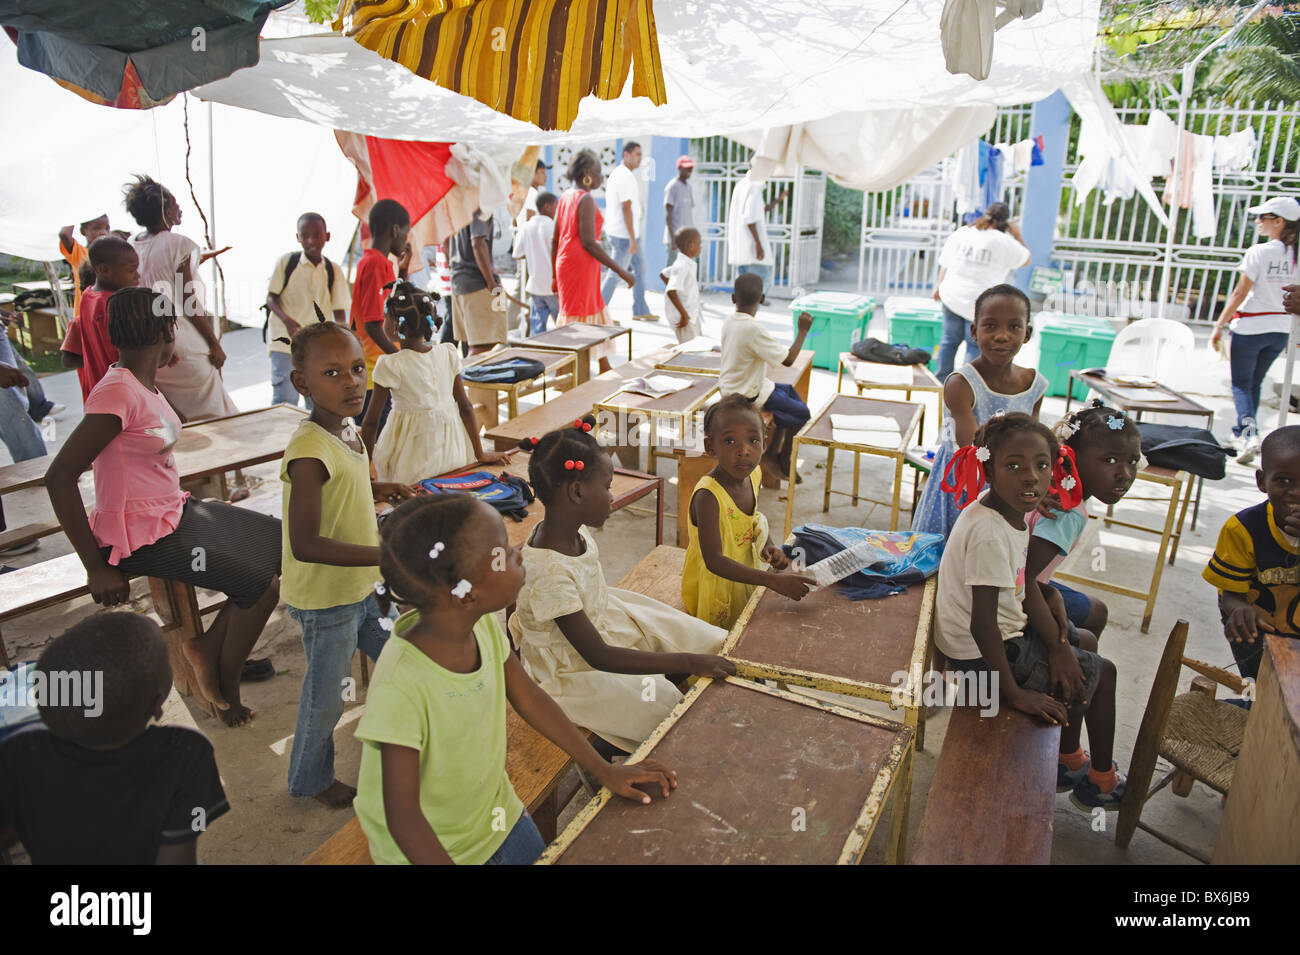 Waisenkinder in einem Waisenhaus nach dem Erdbeben im Januar 2010, Port au Prince, Haiti, West Indies, Karibik, Mittelamerika Stockfoto